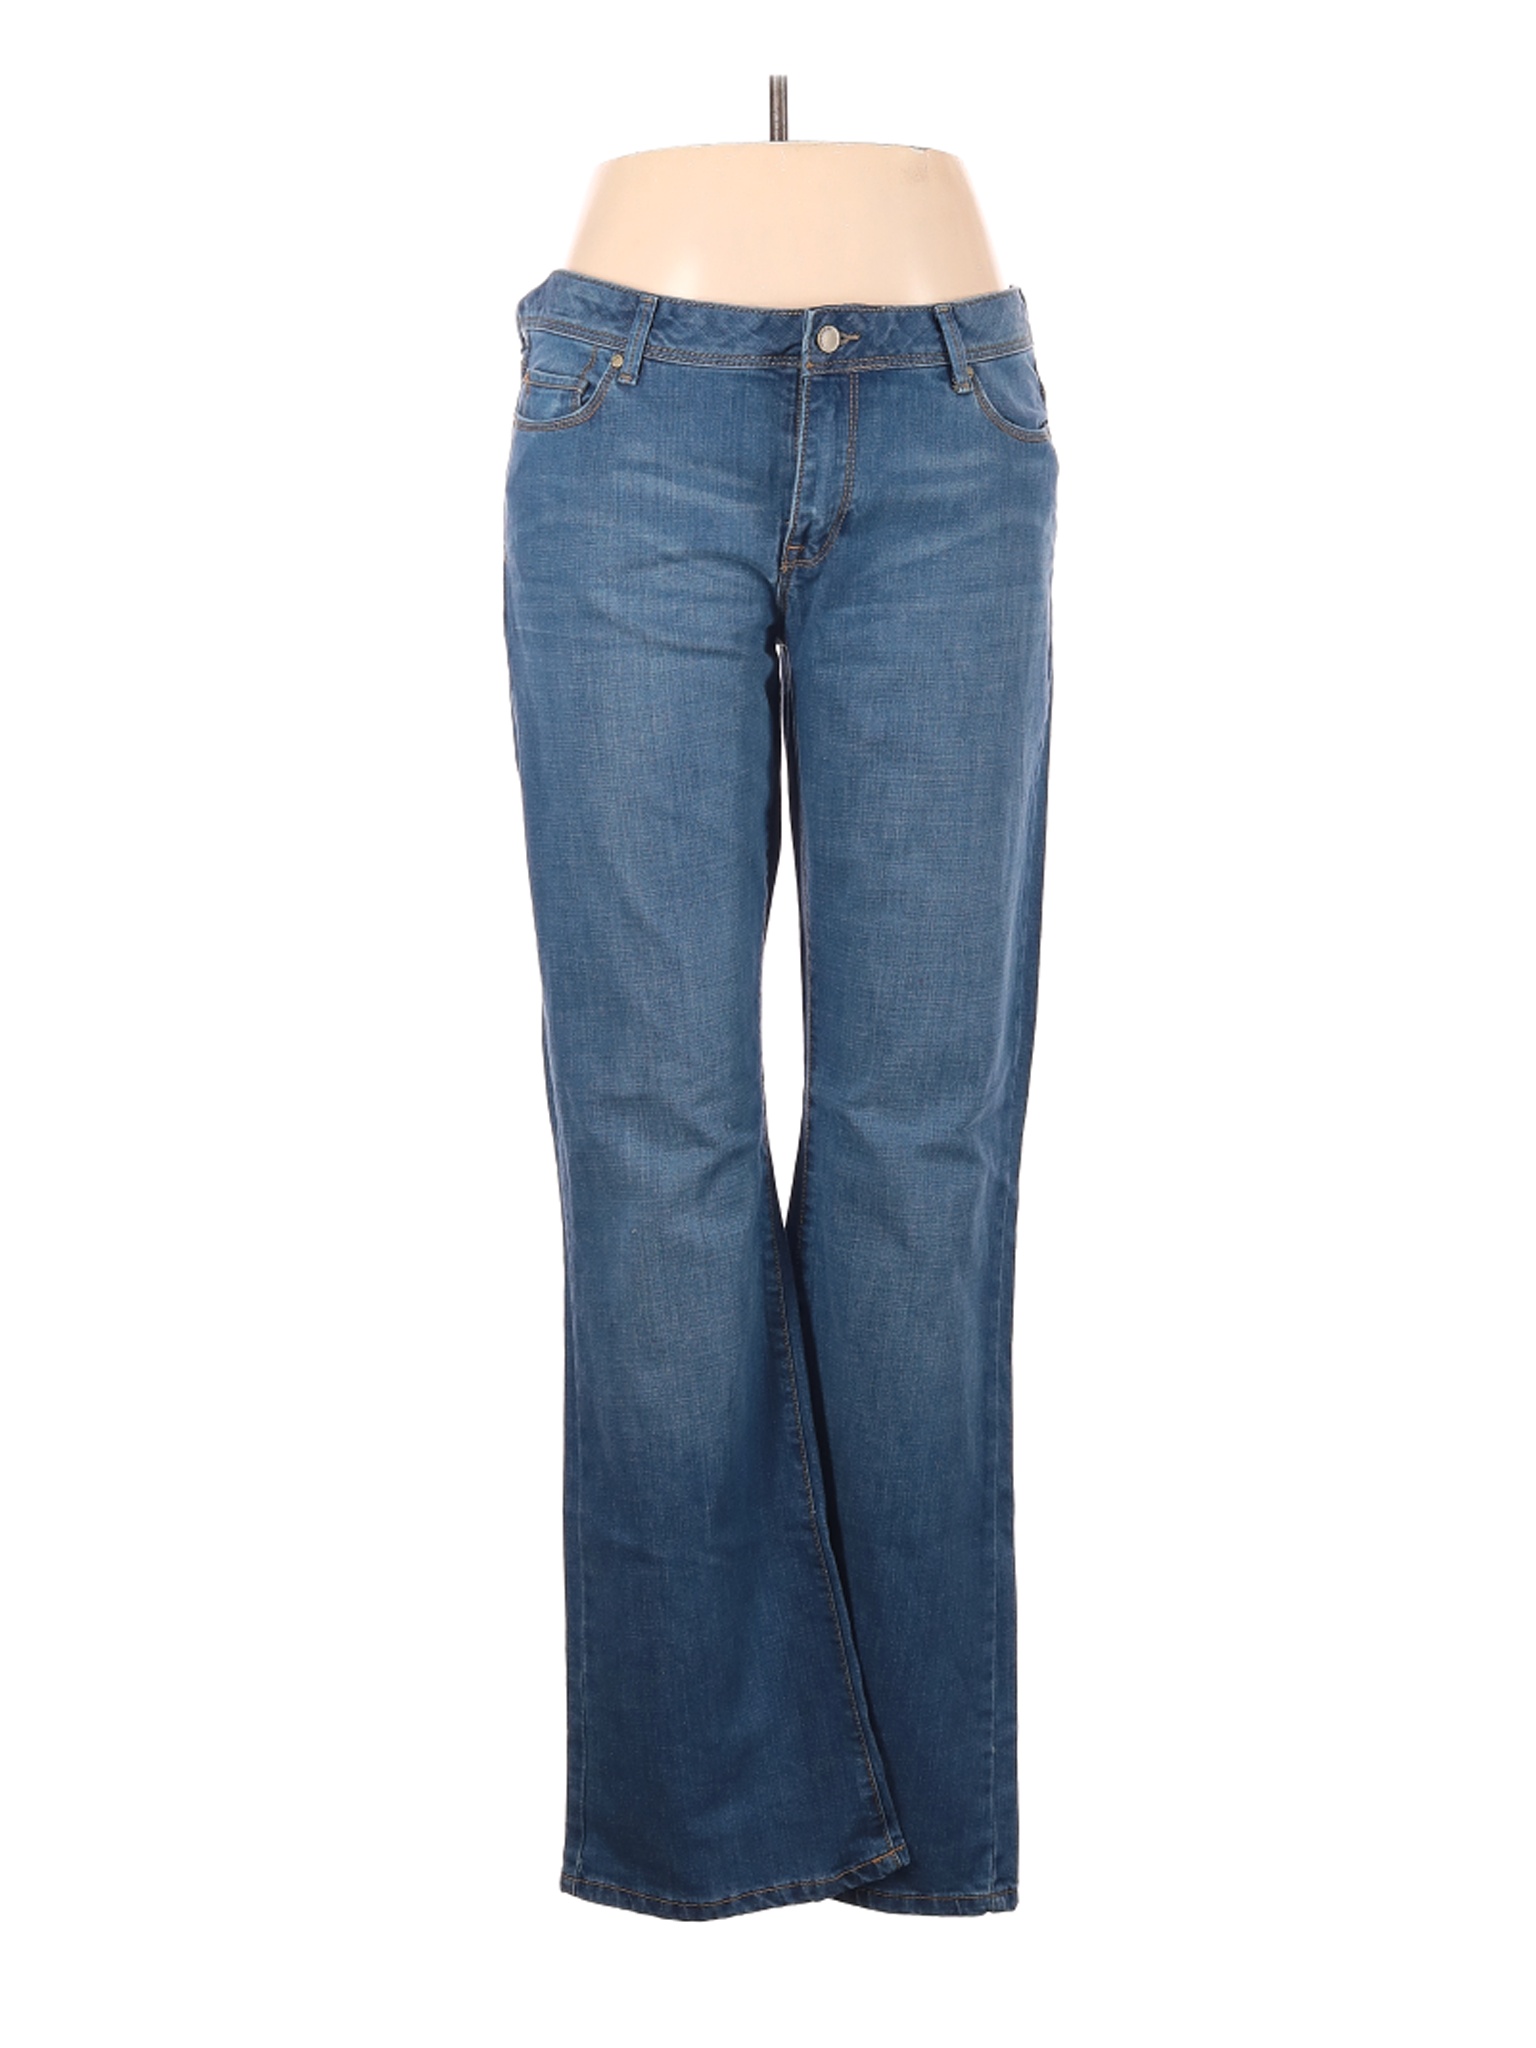 NWT Route 66 Women Blue Jeans 13 | eBay